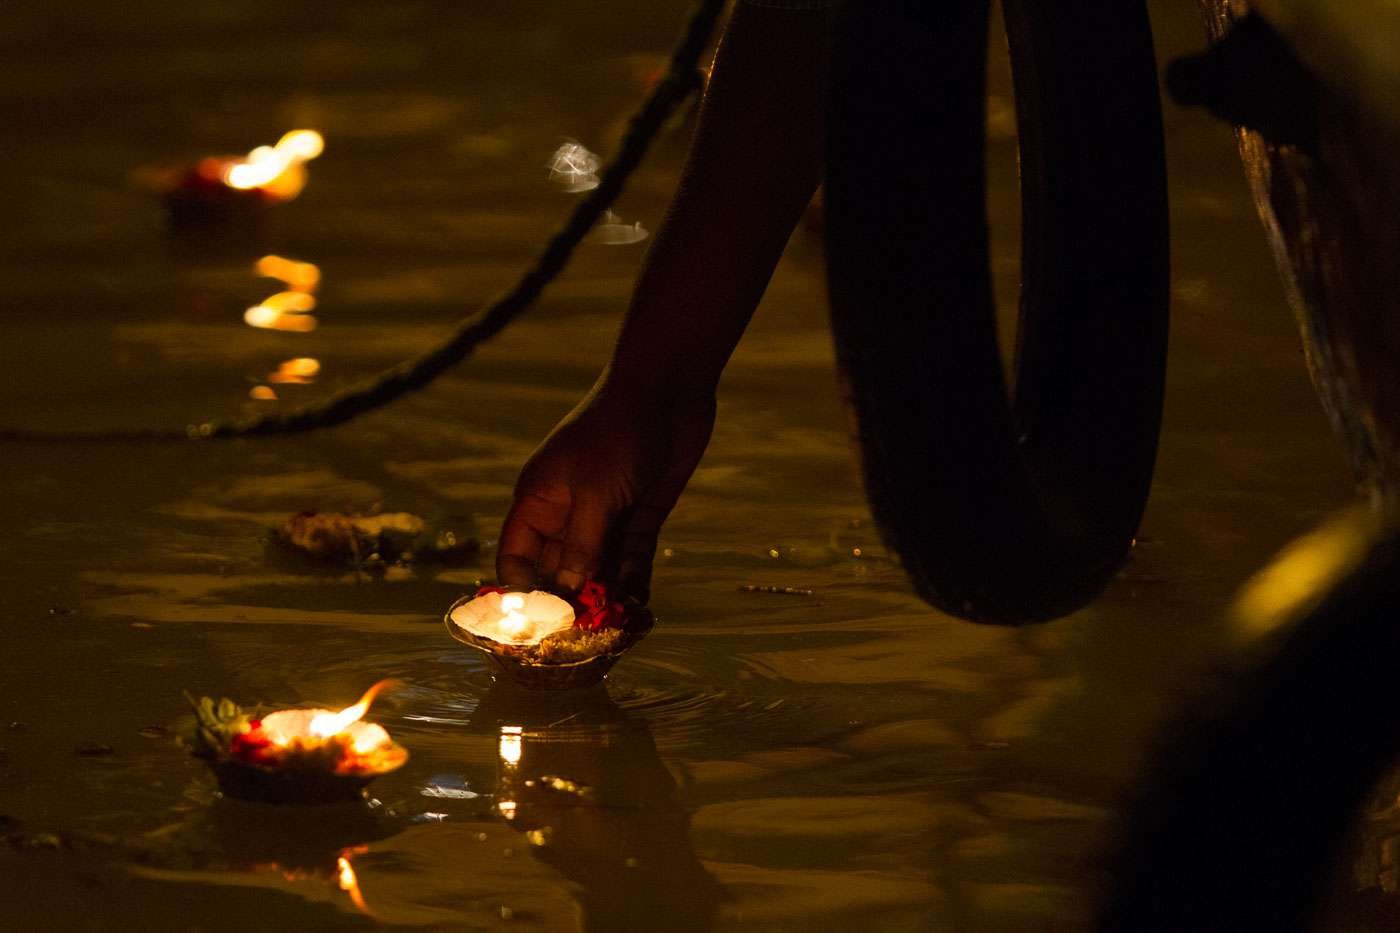 india-varanasi: ganga aarti ritual in progress